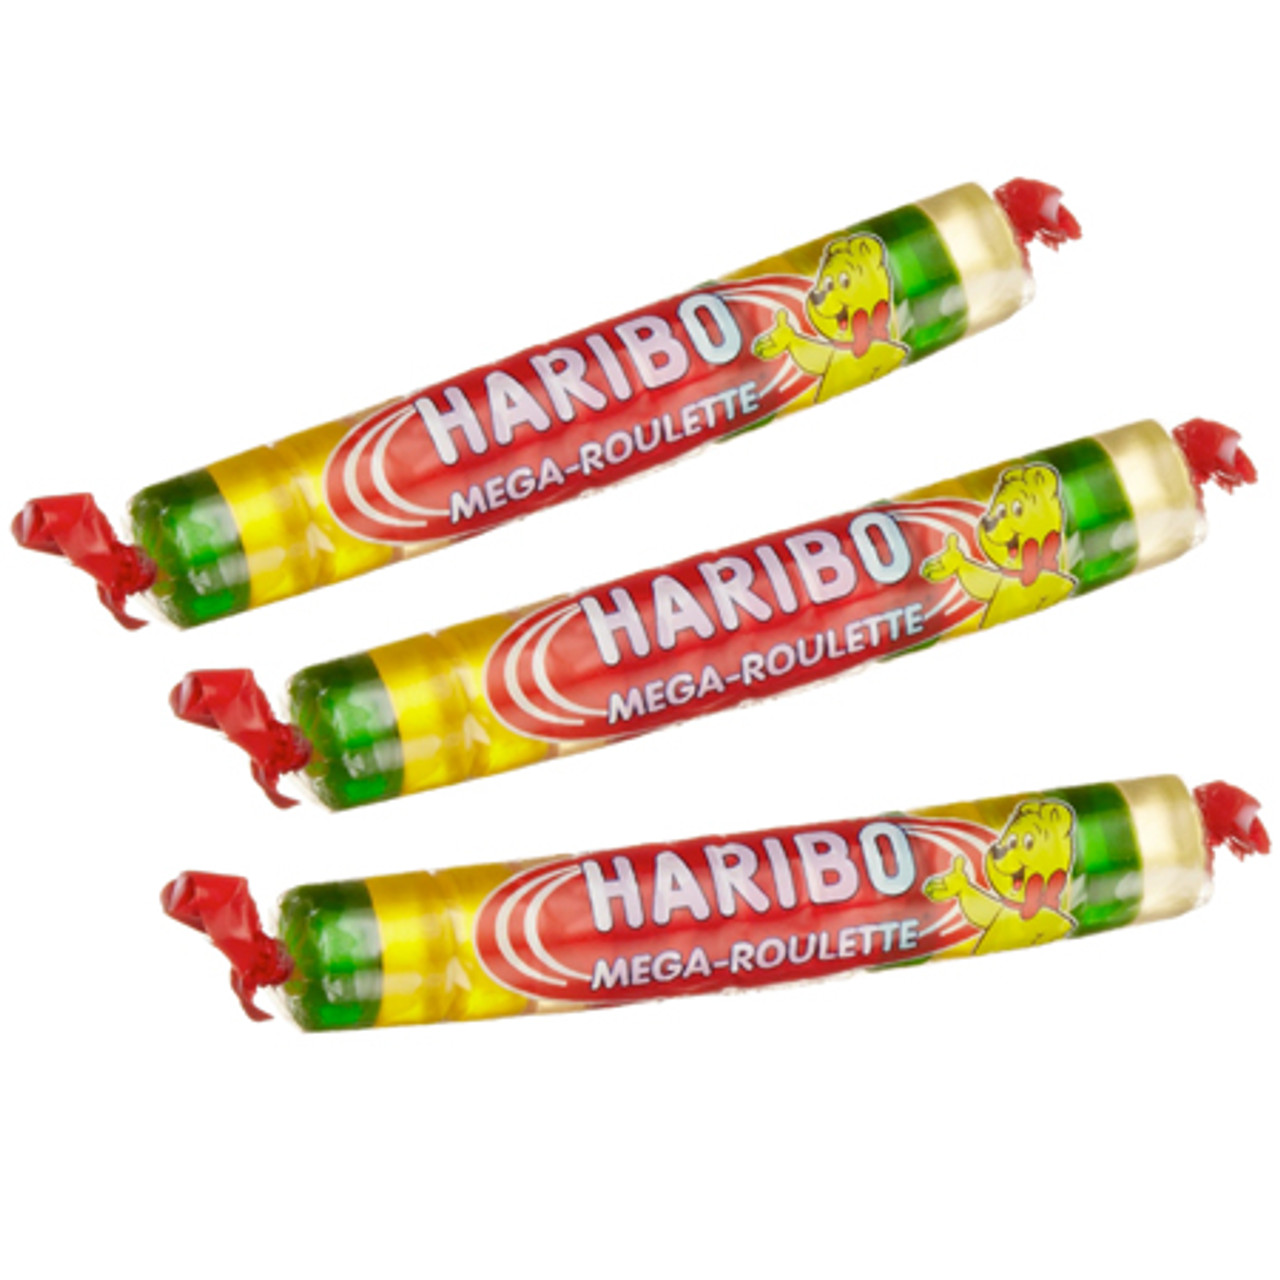 Haribo Roulette Gummi Candy - 36 Count Box